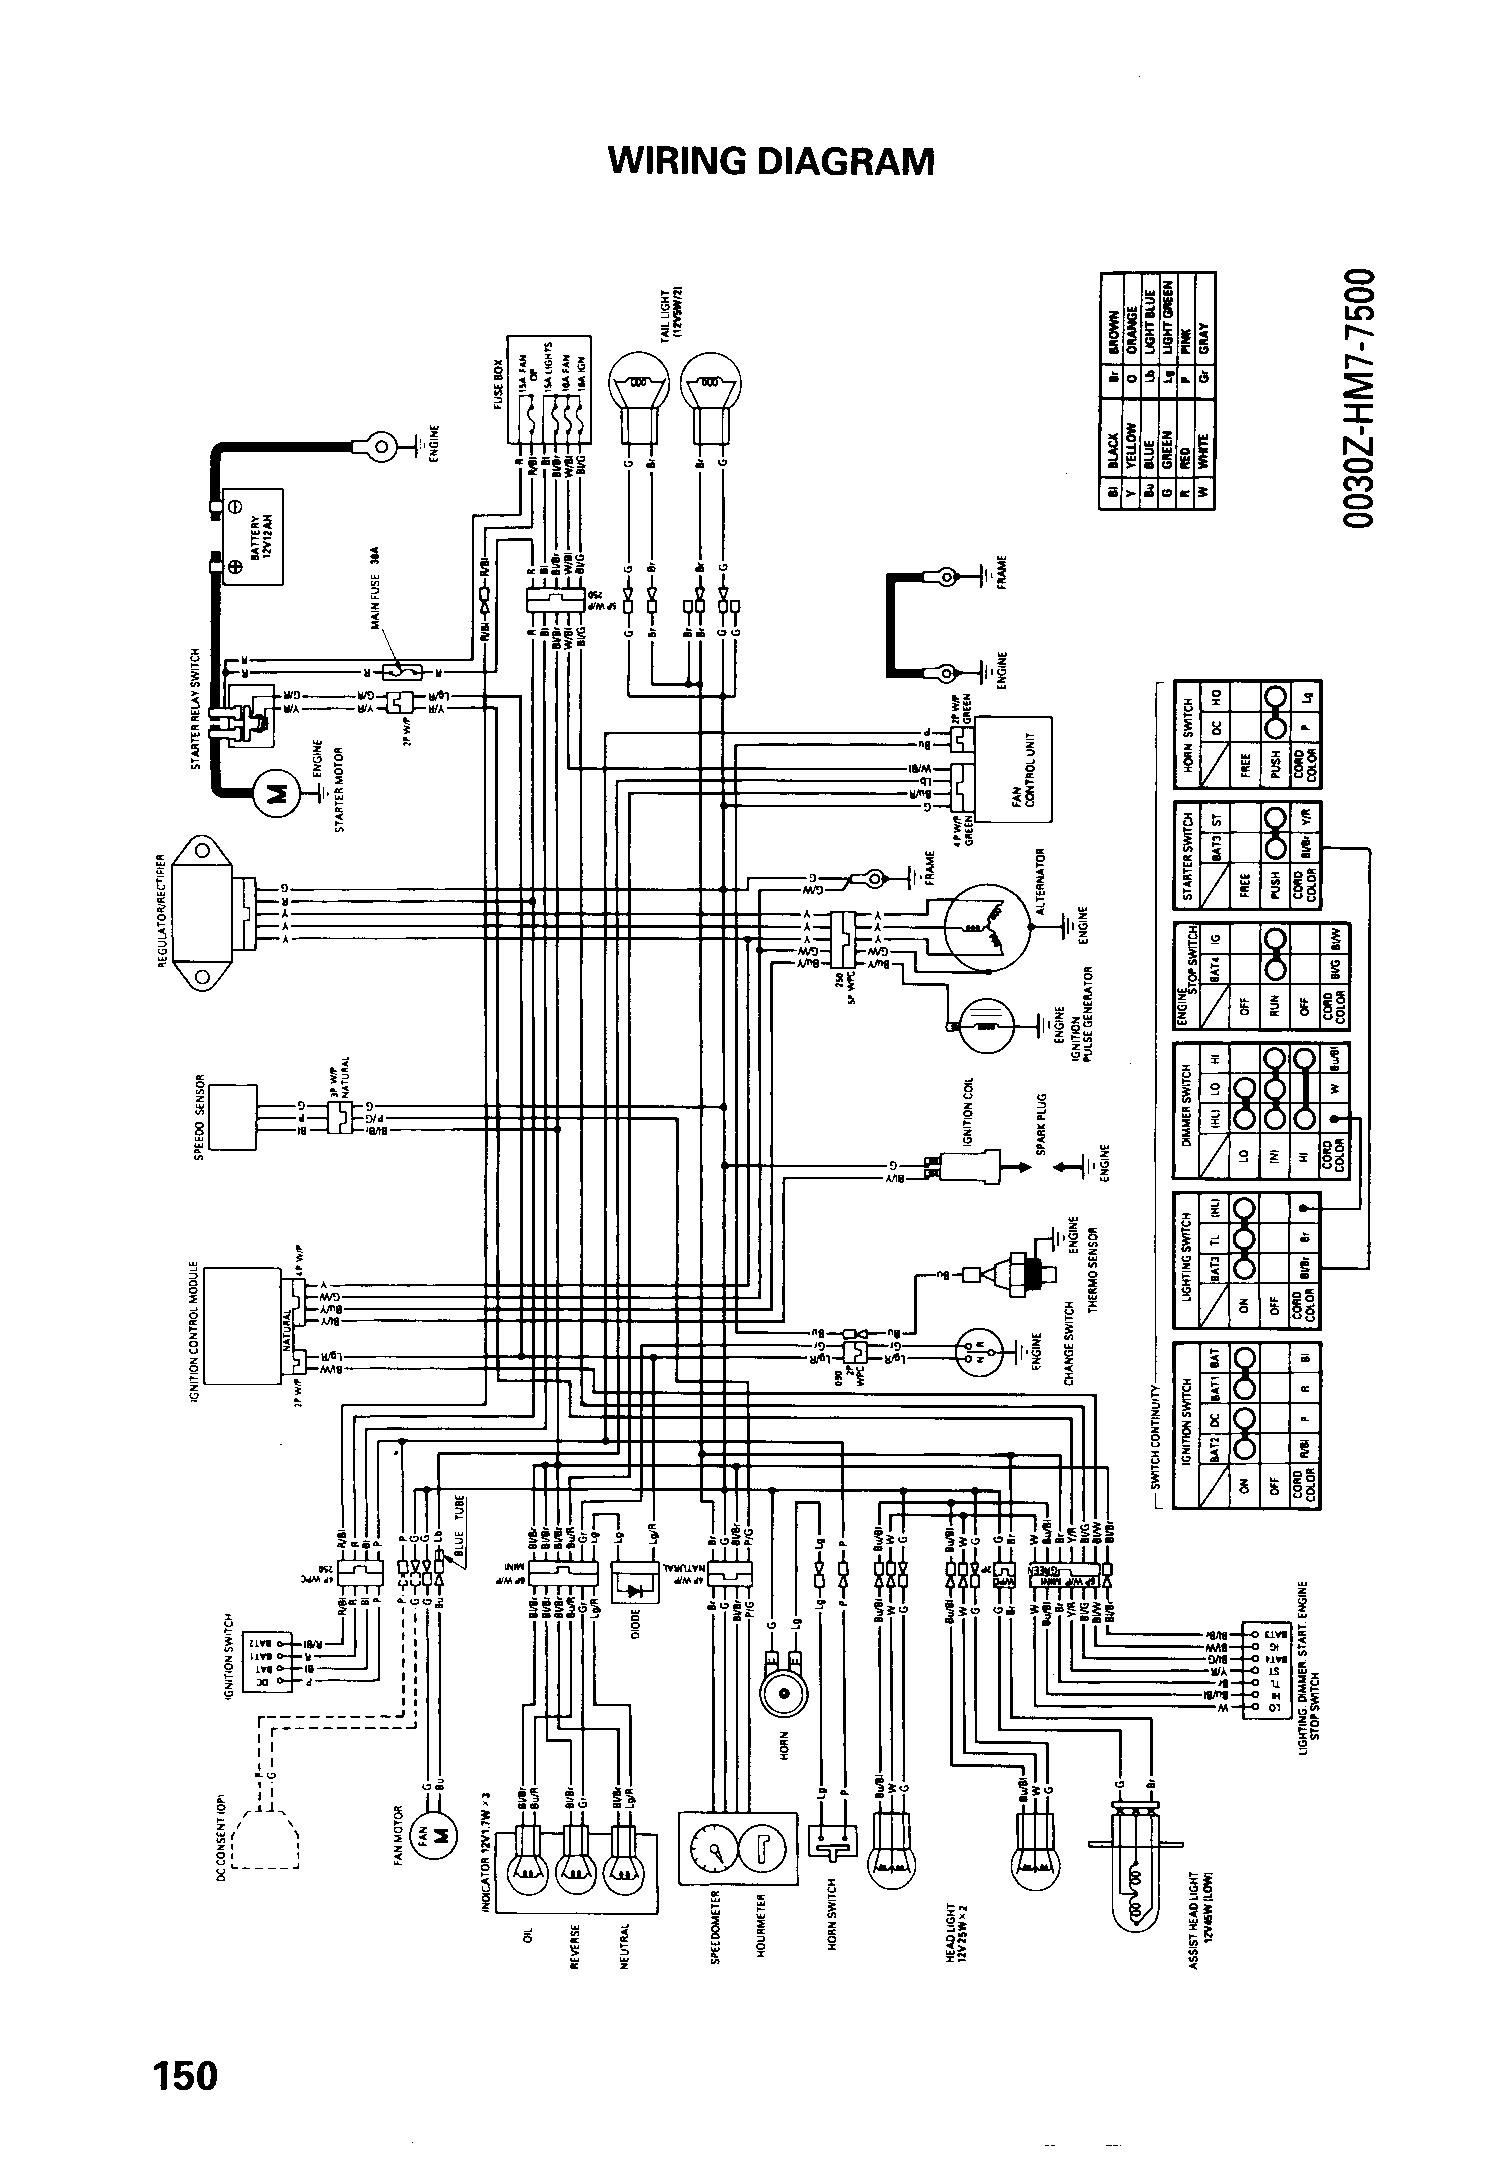 Honda atv Parts Diagram | My Wiring DIagram